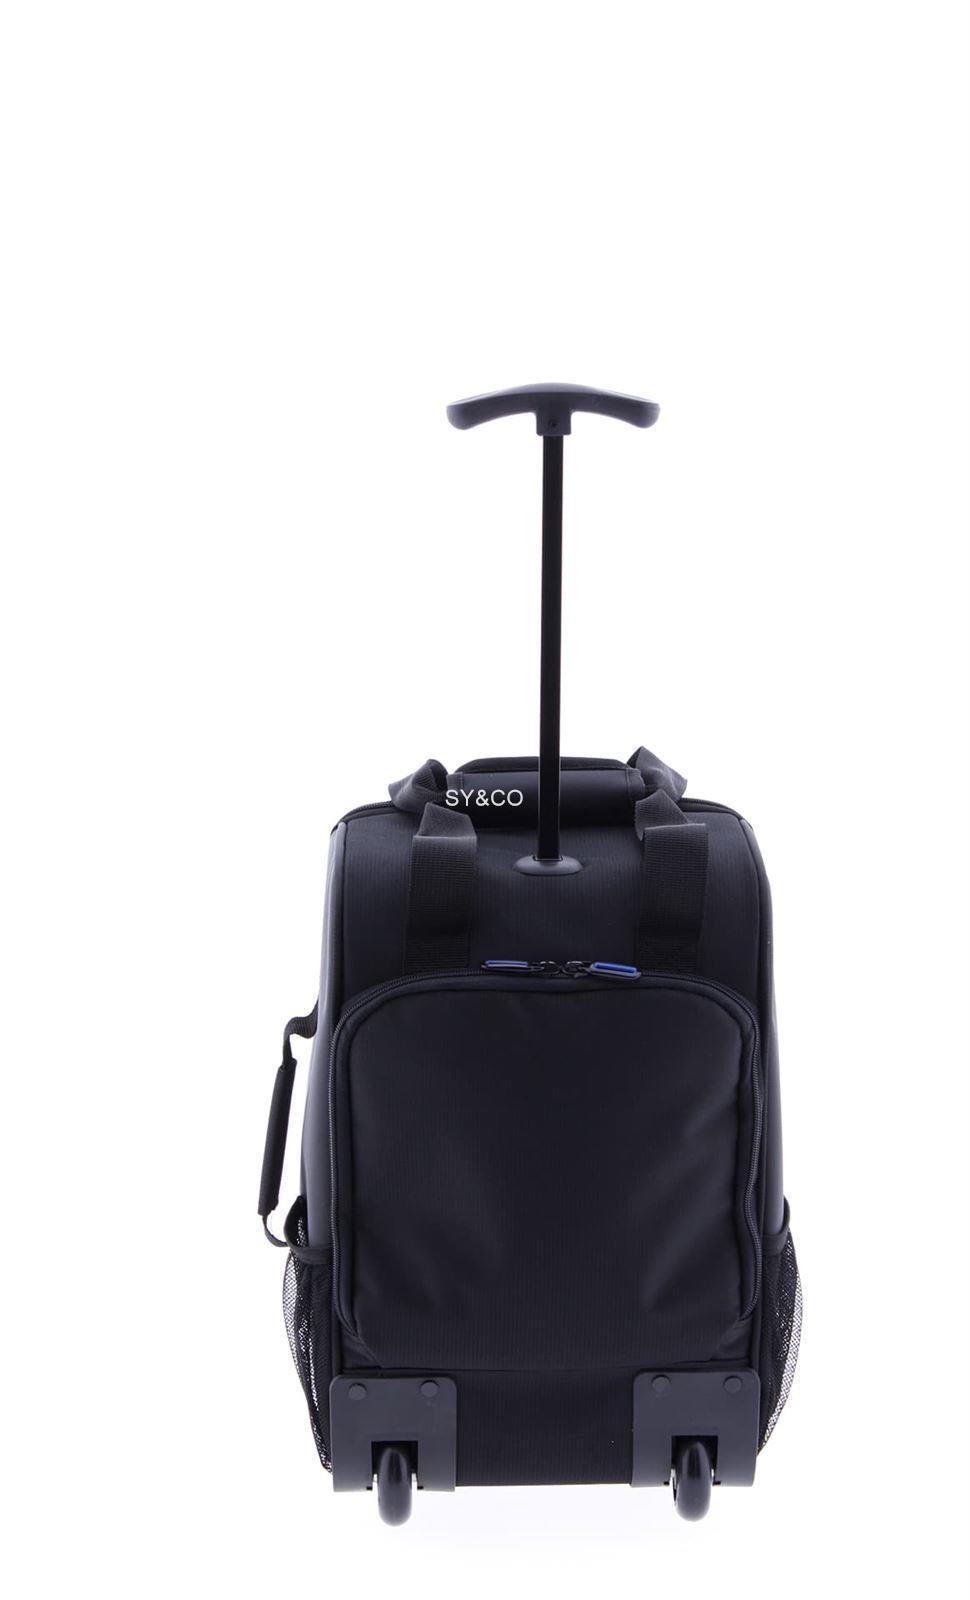 Maleta o mochila para viajar?